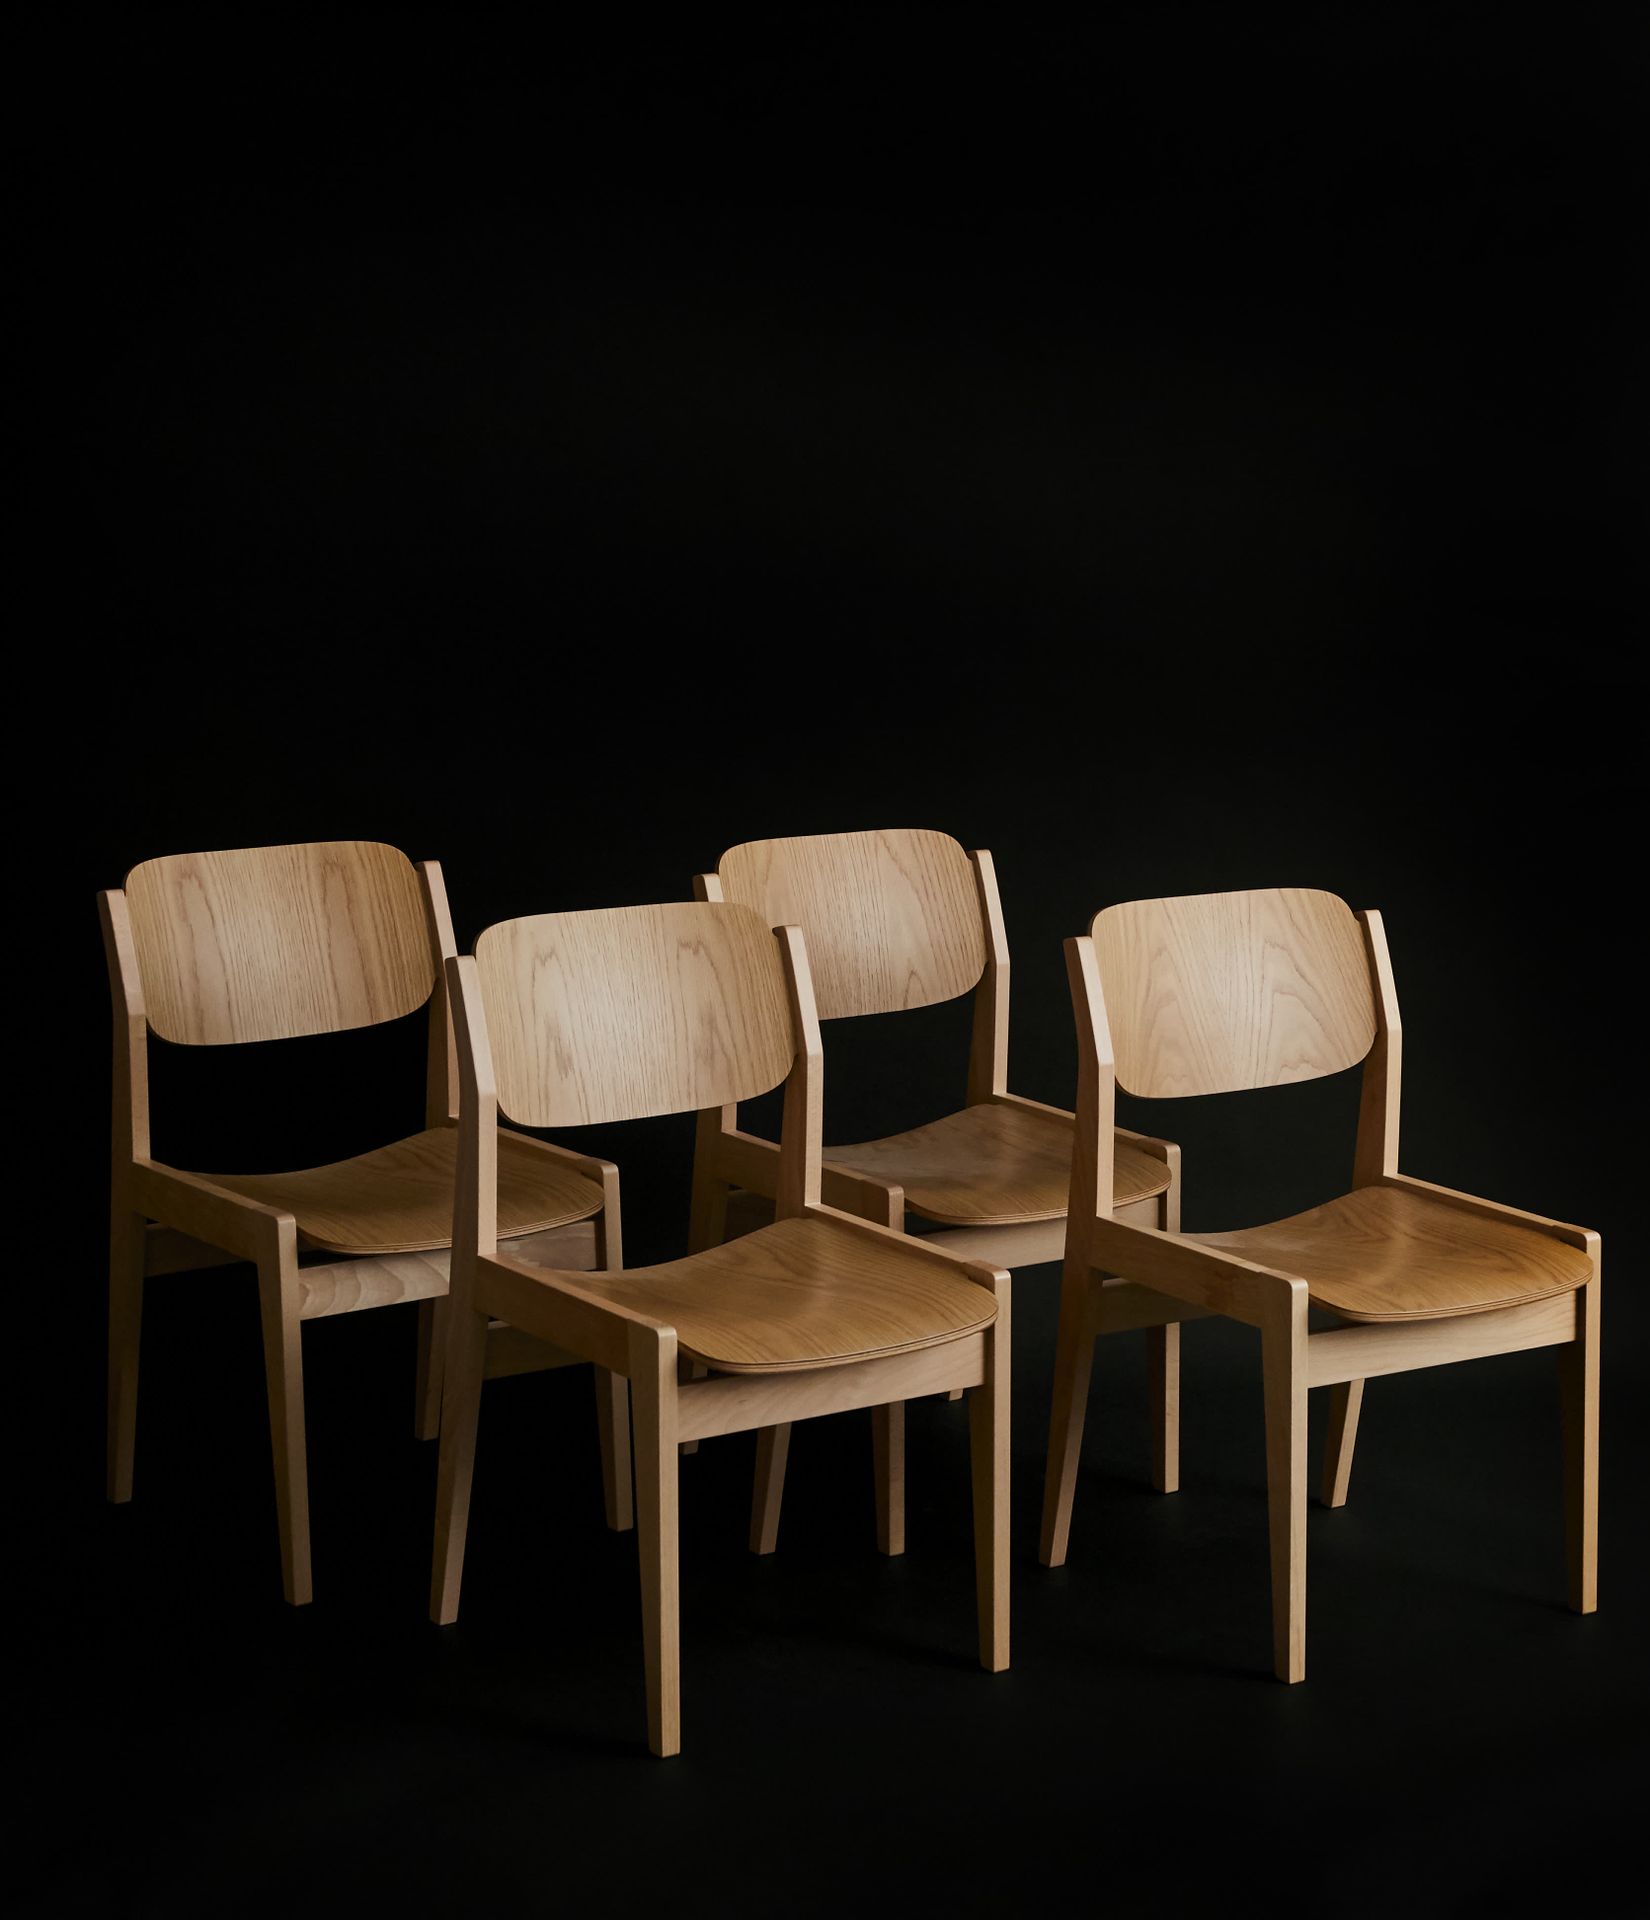 TADAOMI MITSUNOE 四把椅子
柚木和山毛榉---Edition Tendo Mokko
1954
H 77 W 45 D 43 cm